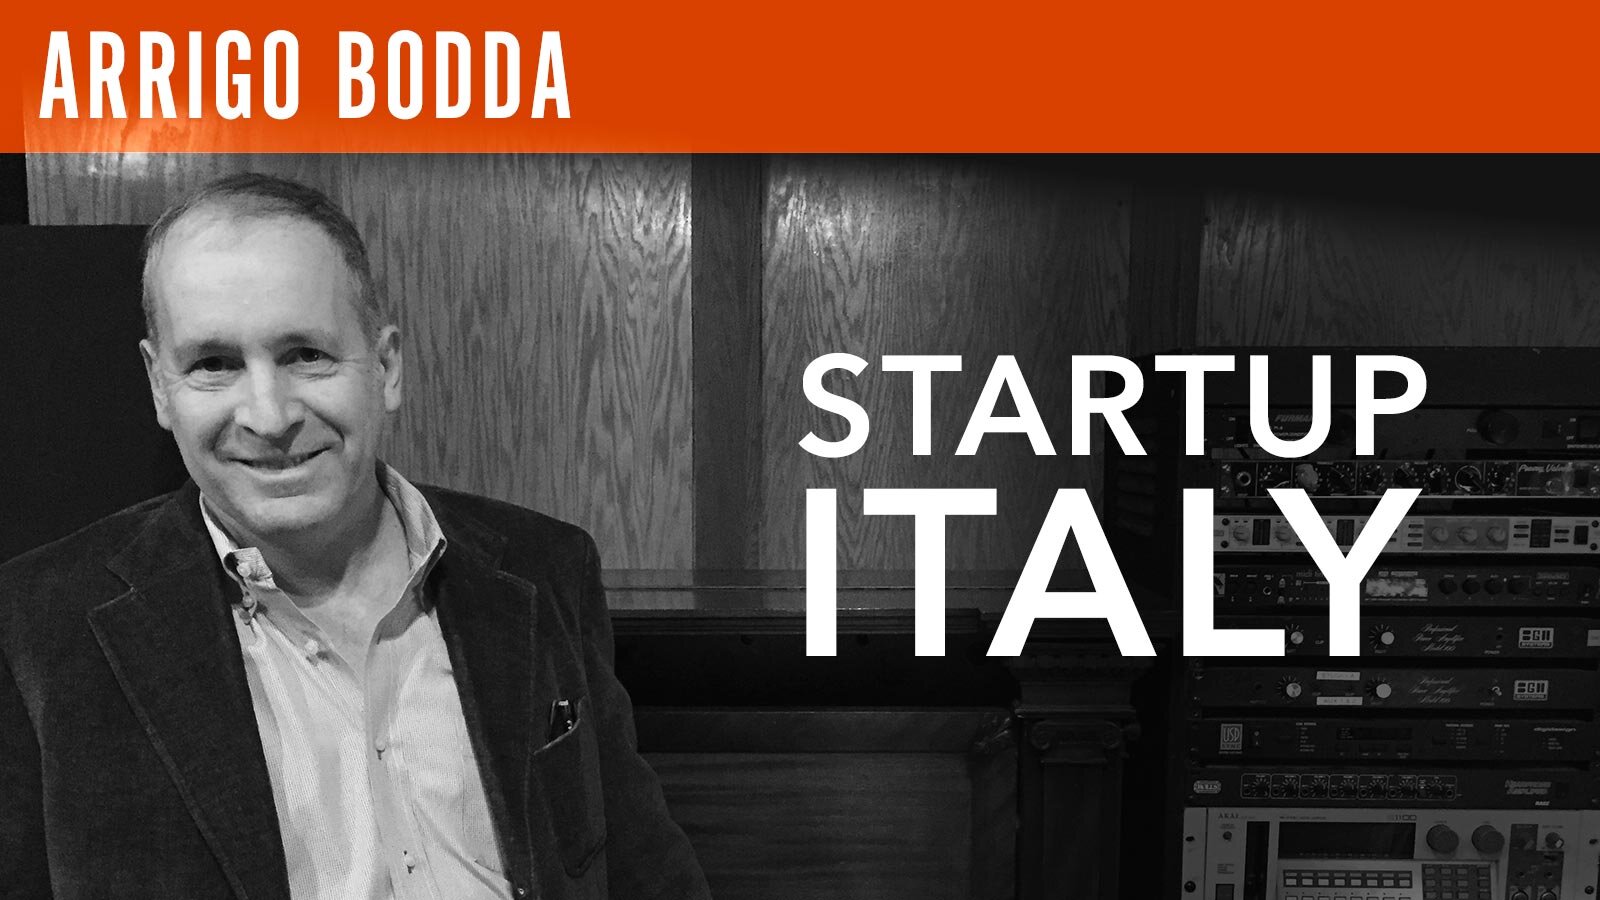 Arrigo Bodda, "Startup Italy"